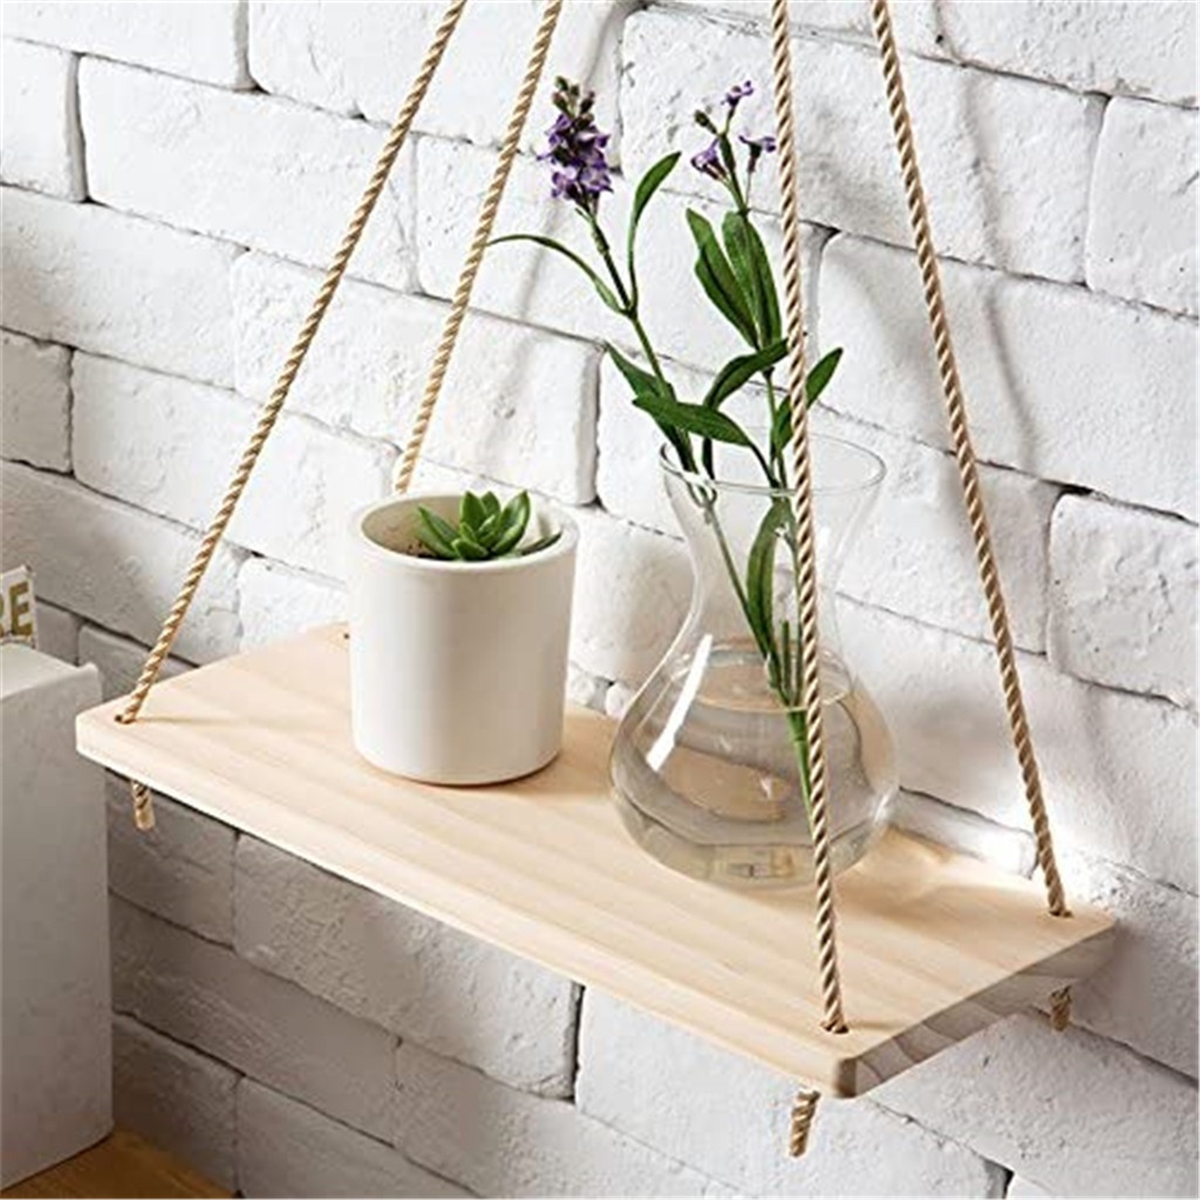 Wooden-Hanging-Shelf-Swing-Floating-Shelves-Rope-Wall-Display-Rack-Decorate-1828914-3